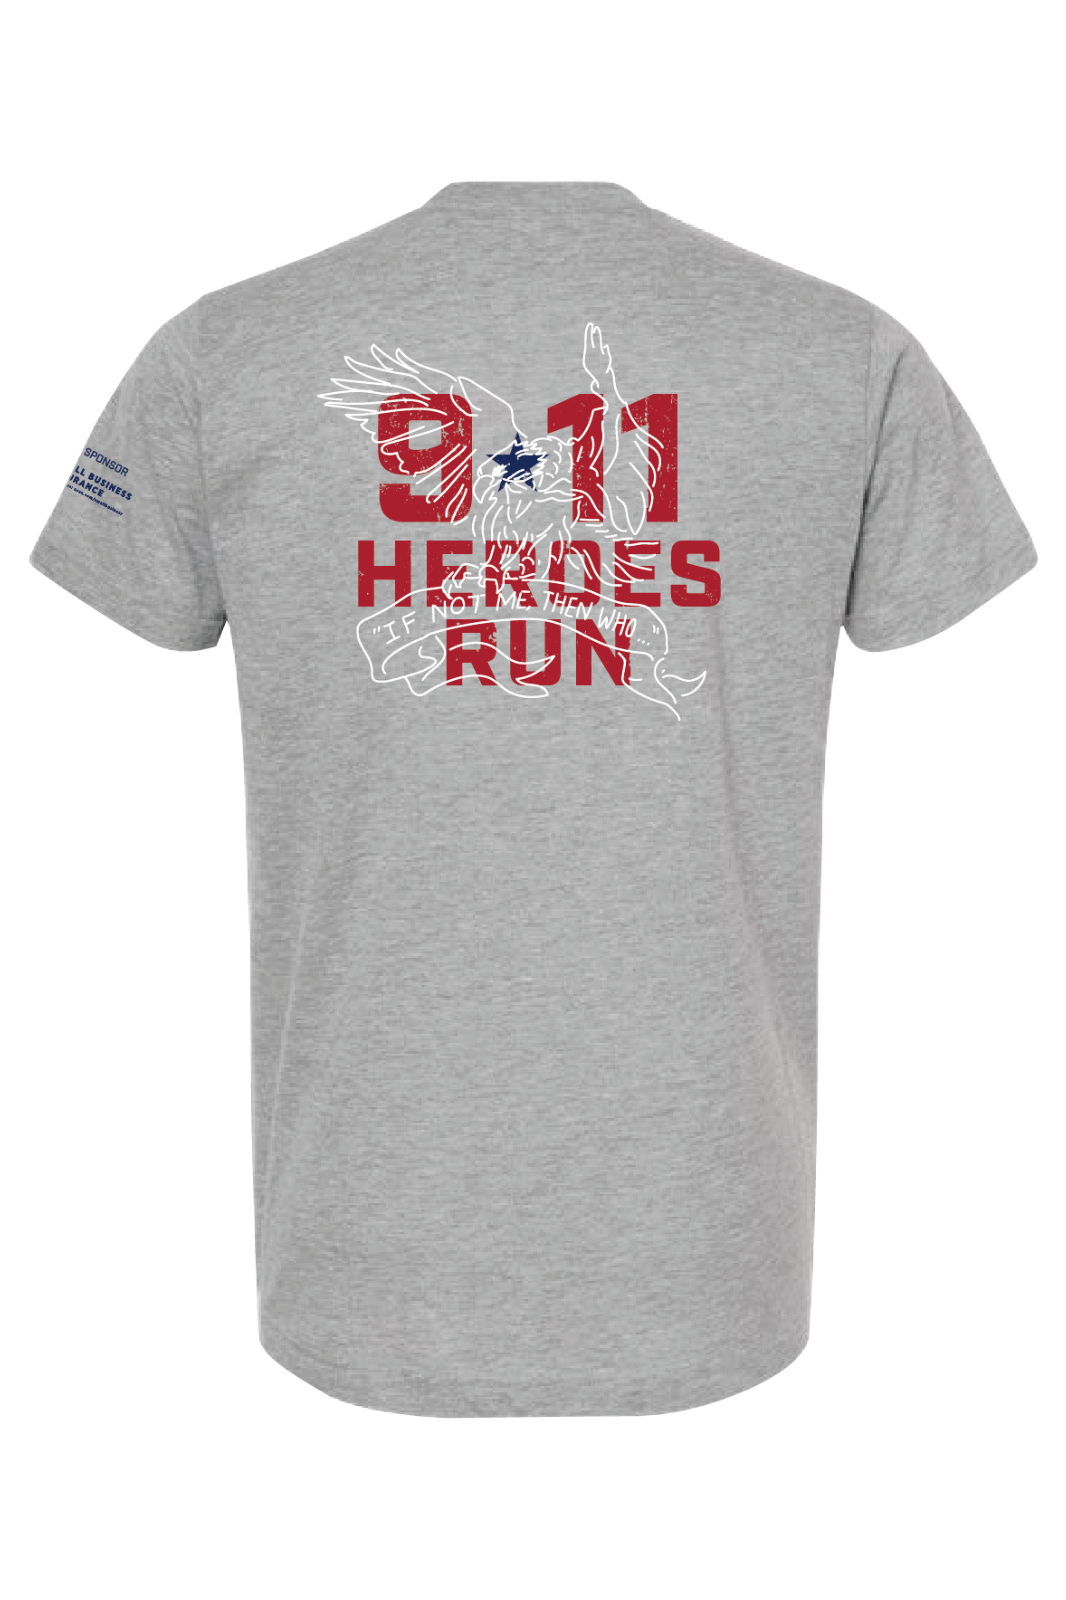 2022 Heroes Run Shirt